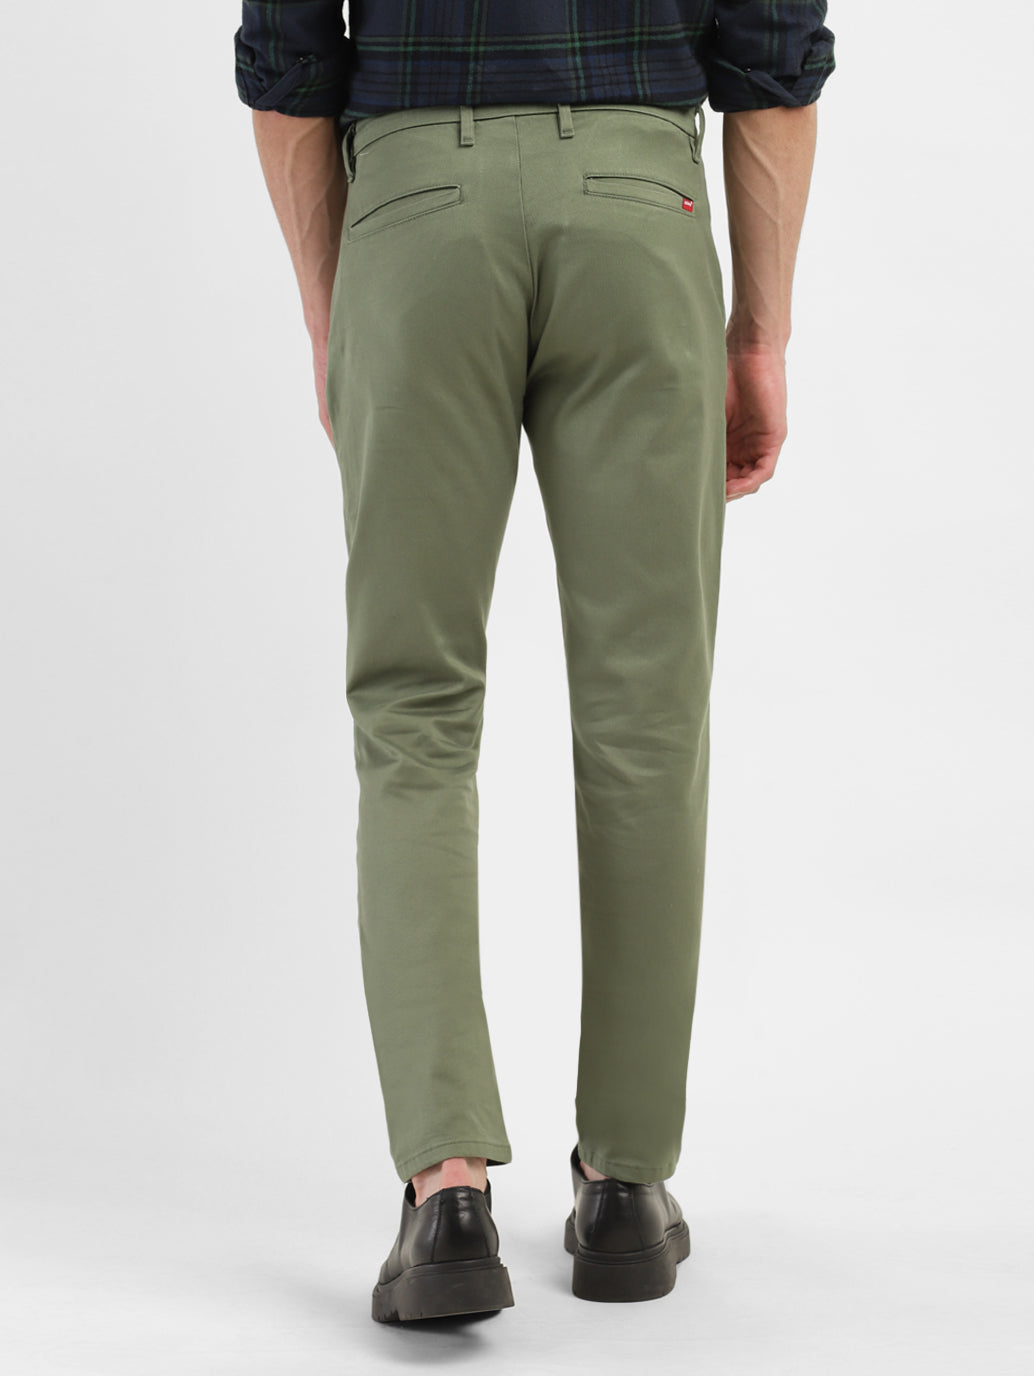 Men's Men's Olive Slim Fit Trousers